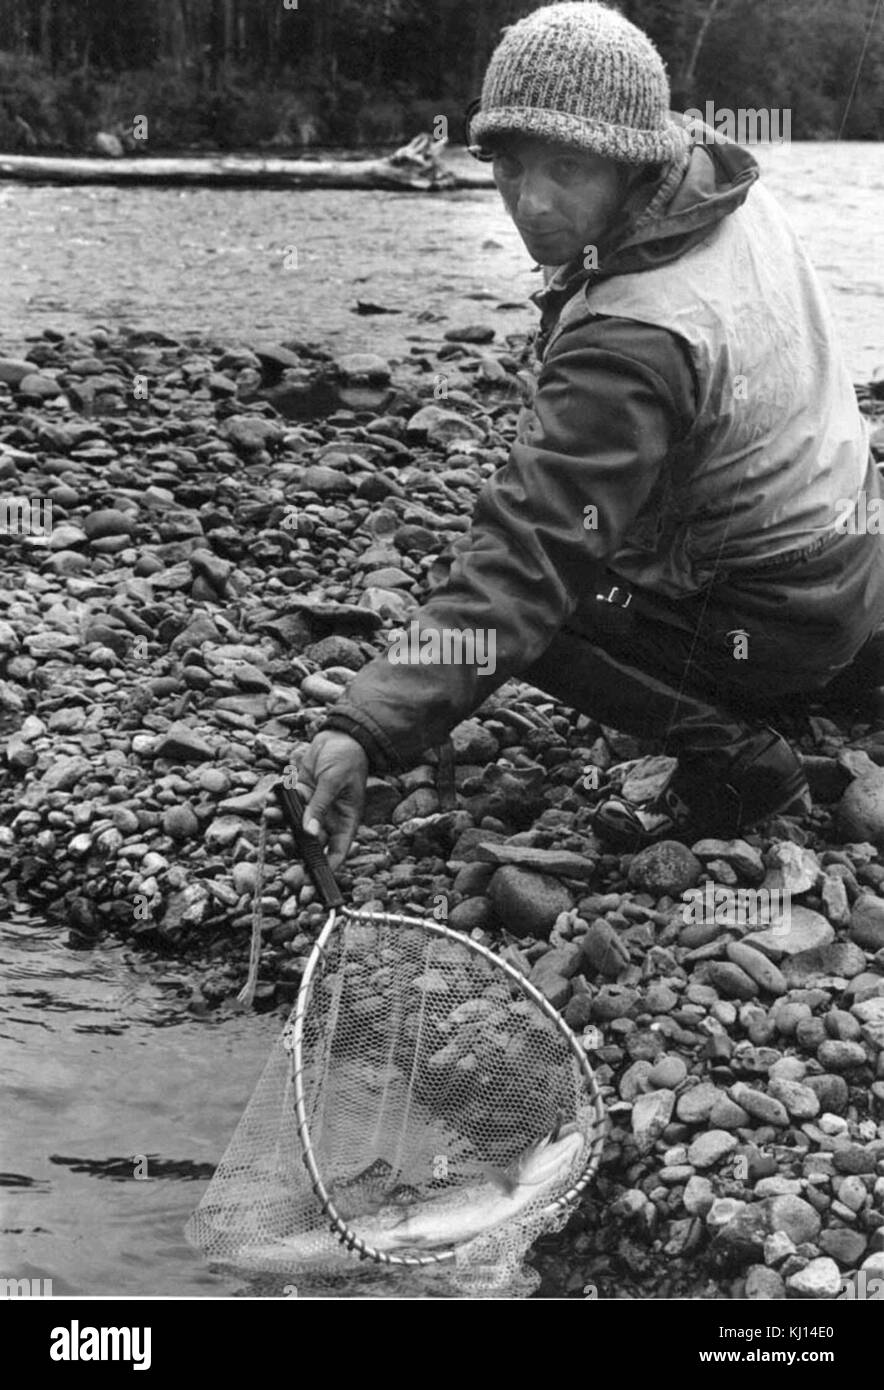 Man fishing vintage black and white photo Stock Photo - Alamy